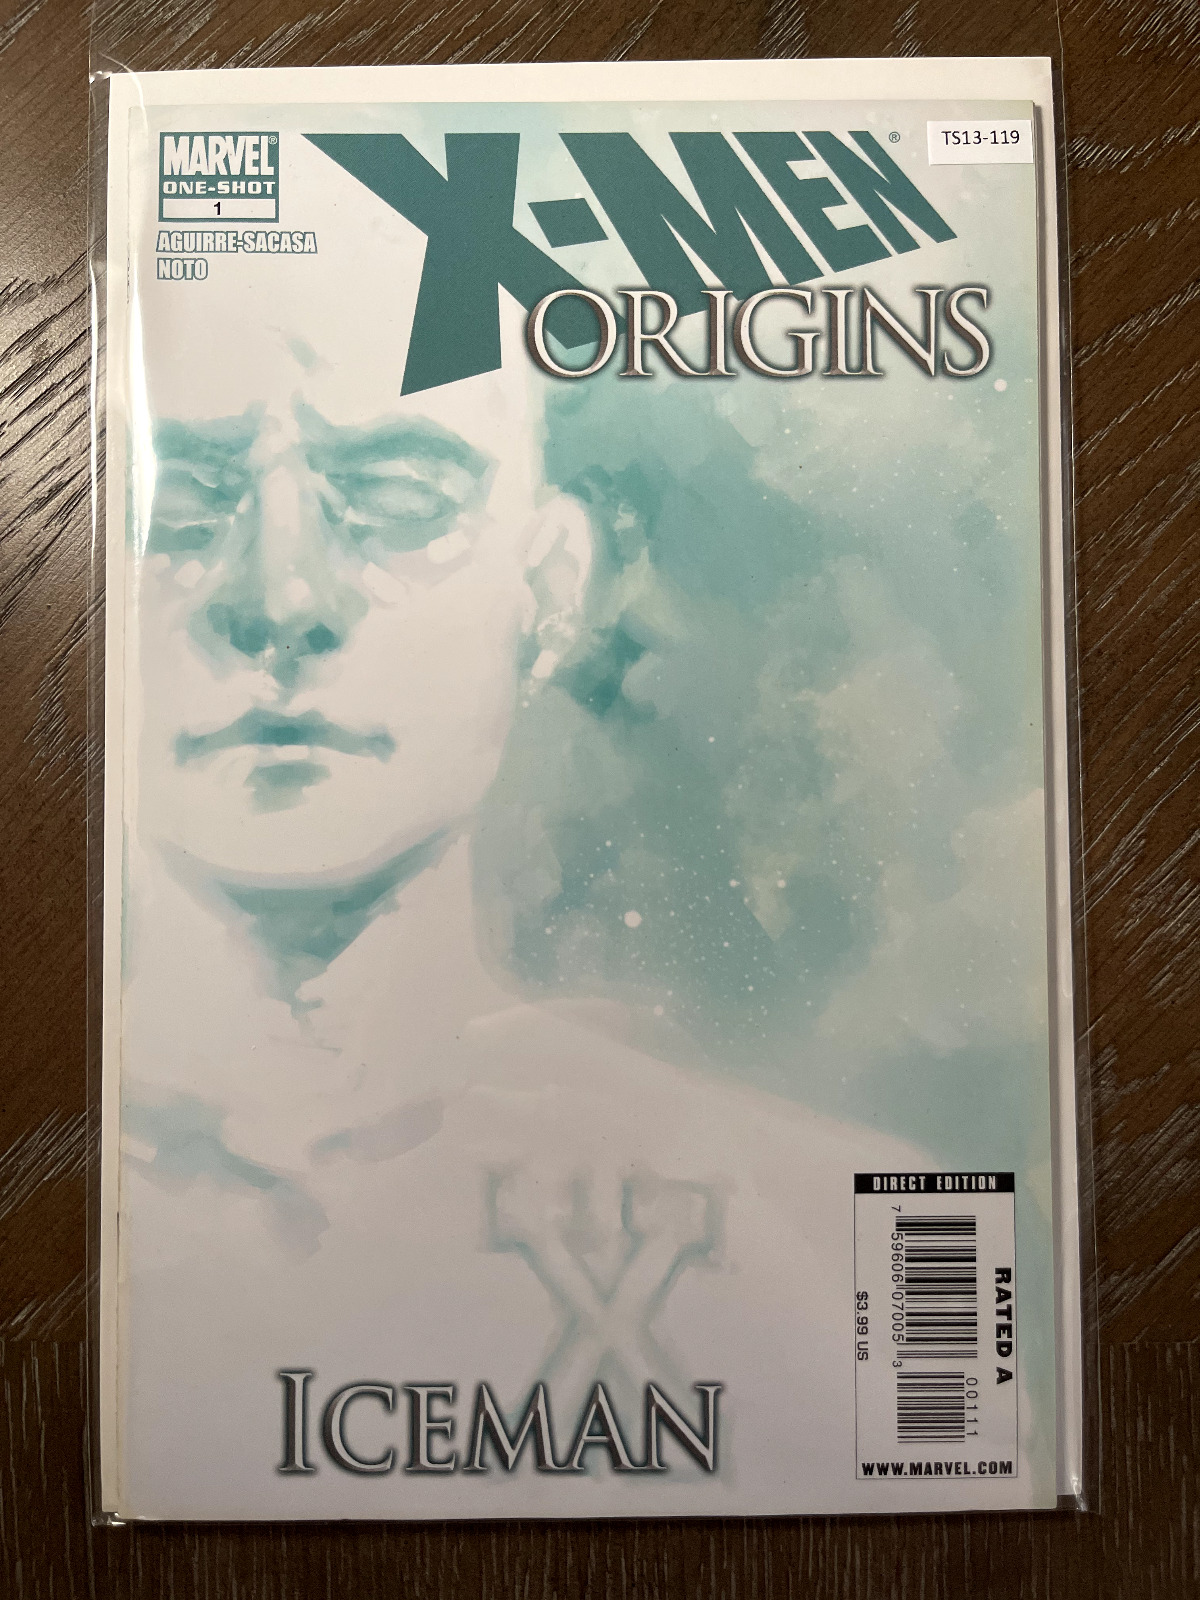 X-MEN ORIGINS ICEMAN #1 MARVEL COMIC BOOK HIGH GRADE 9.0 TS13-119